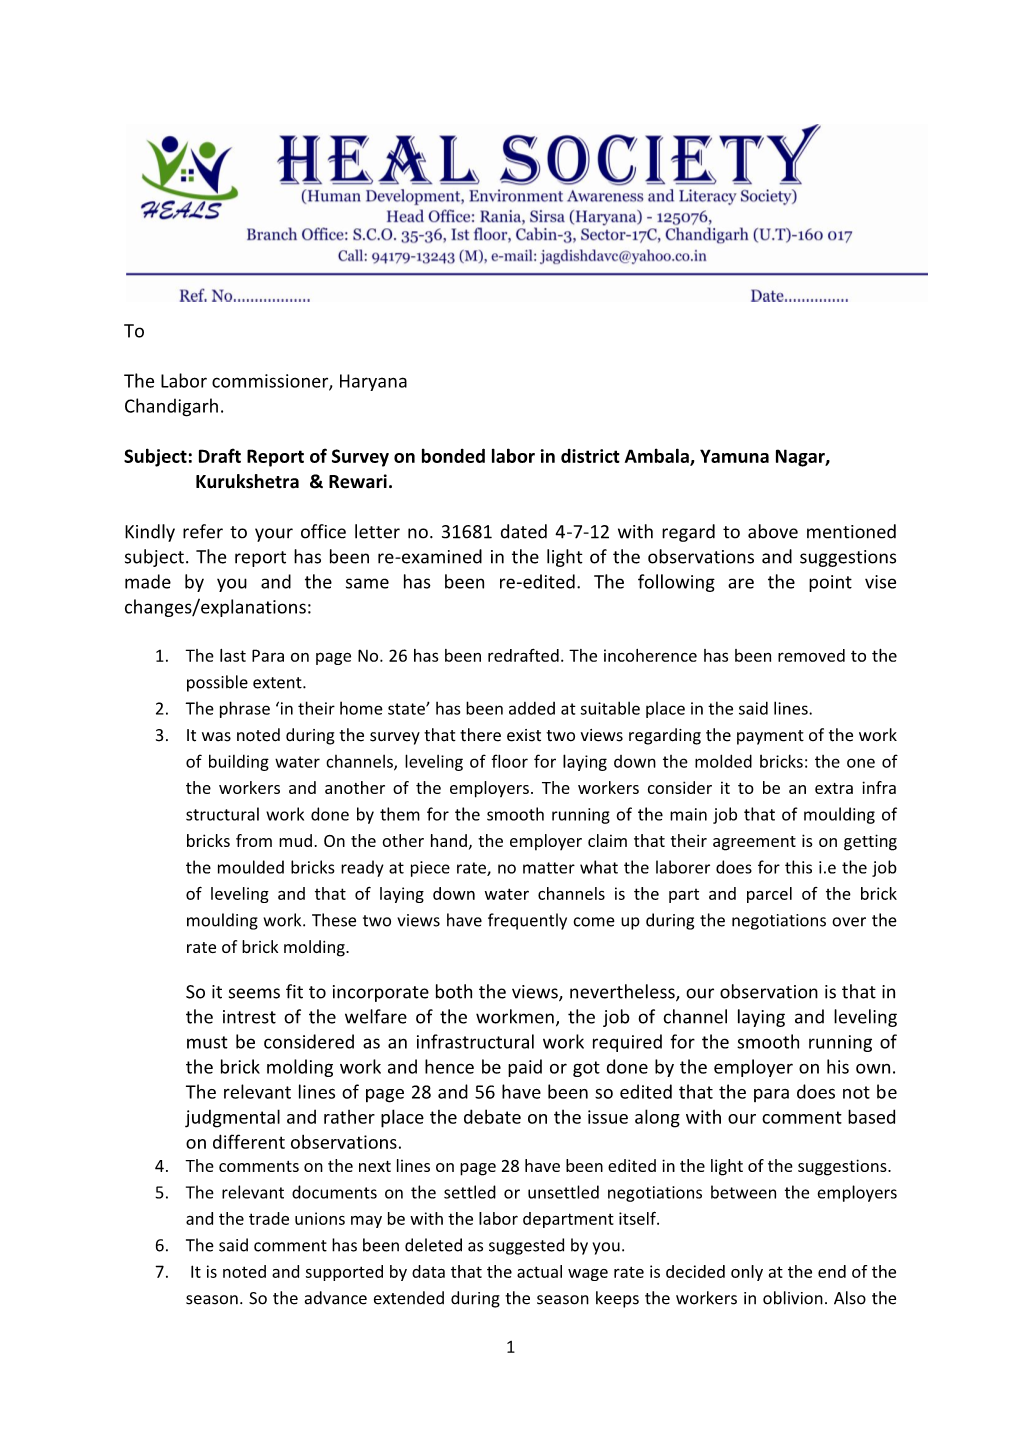 Draft Report of Survey on Bonded Labor in District Ambala, Yamuna Nagar, Kurukshetra & Rewari